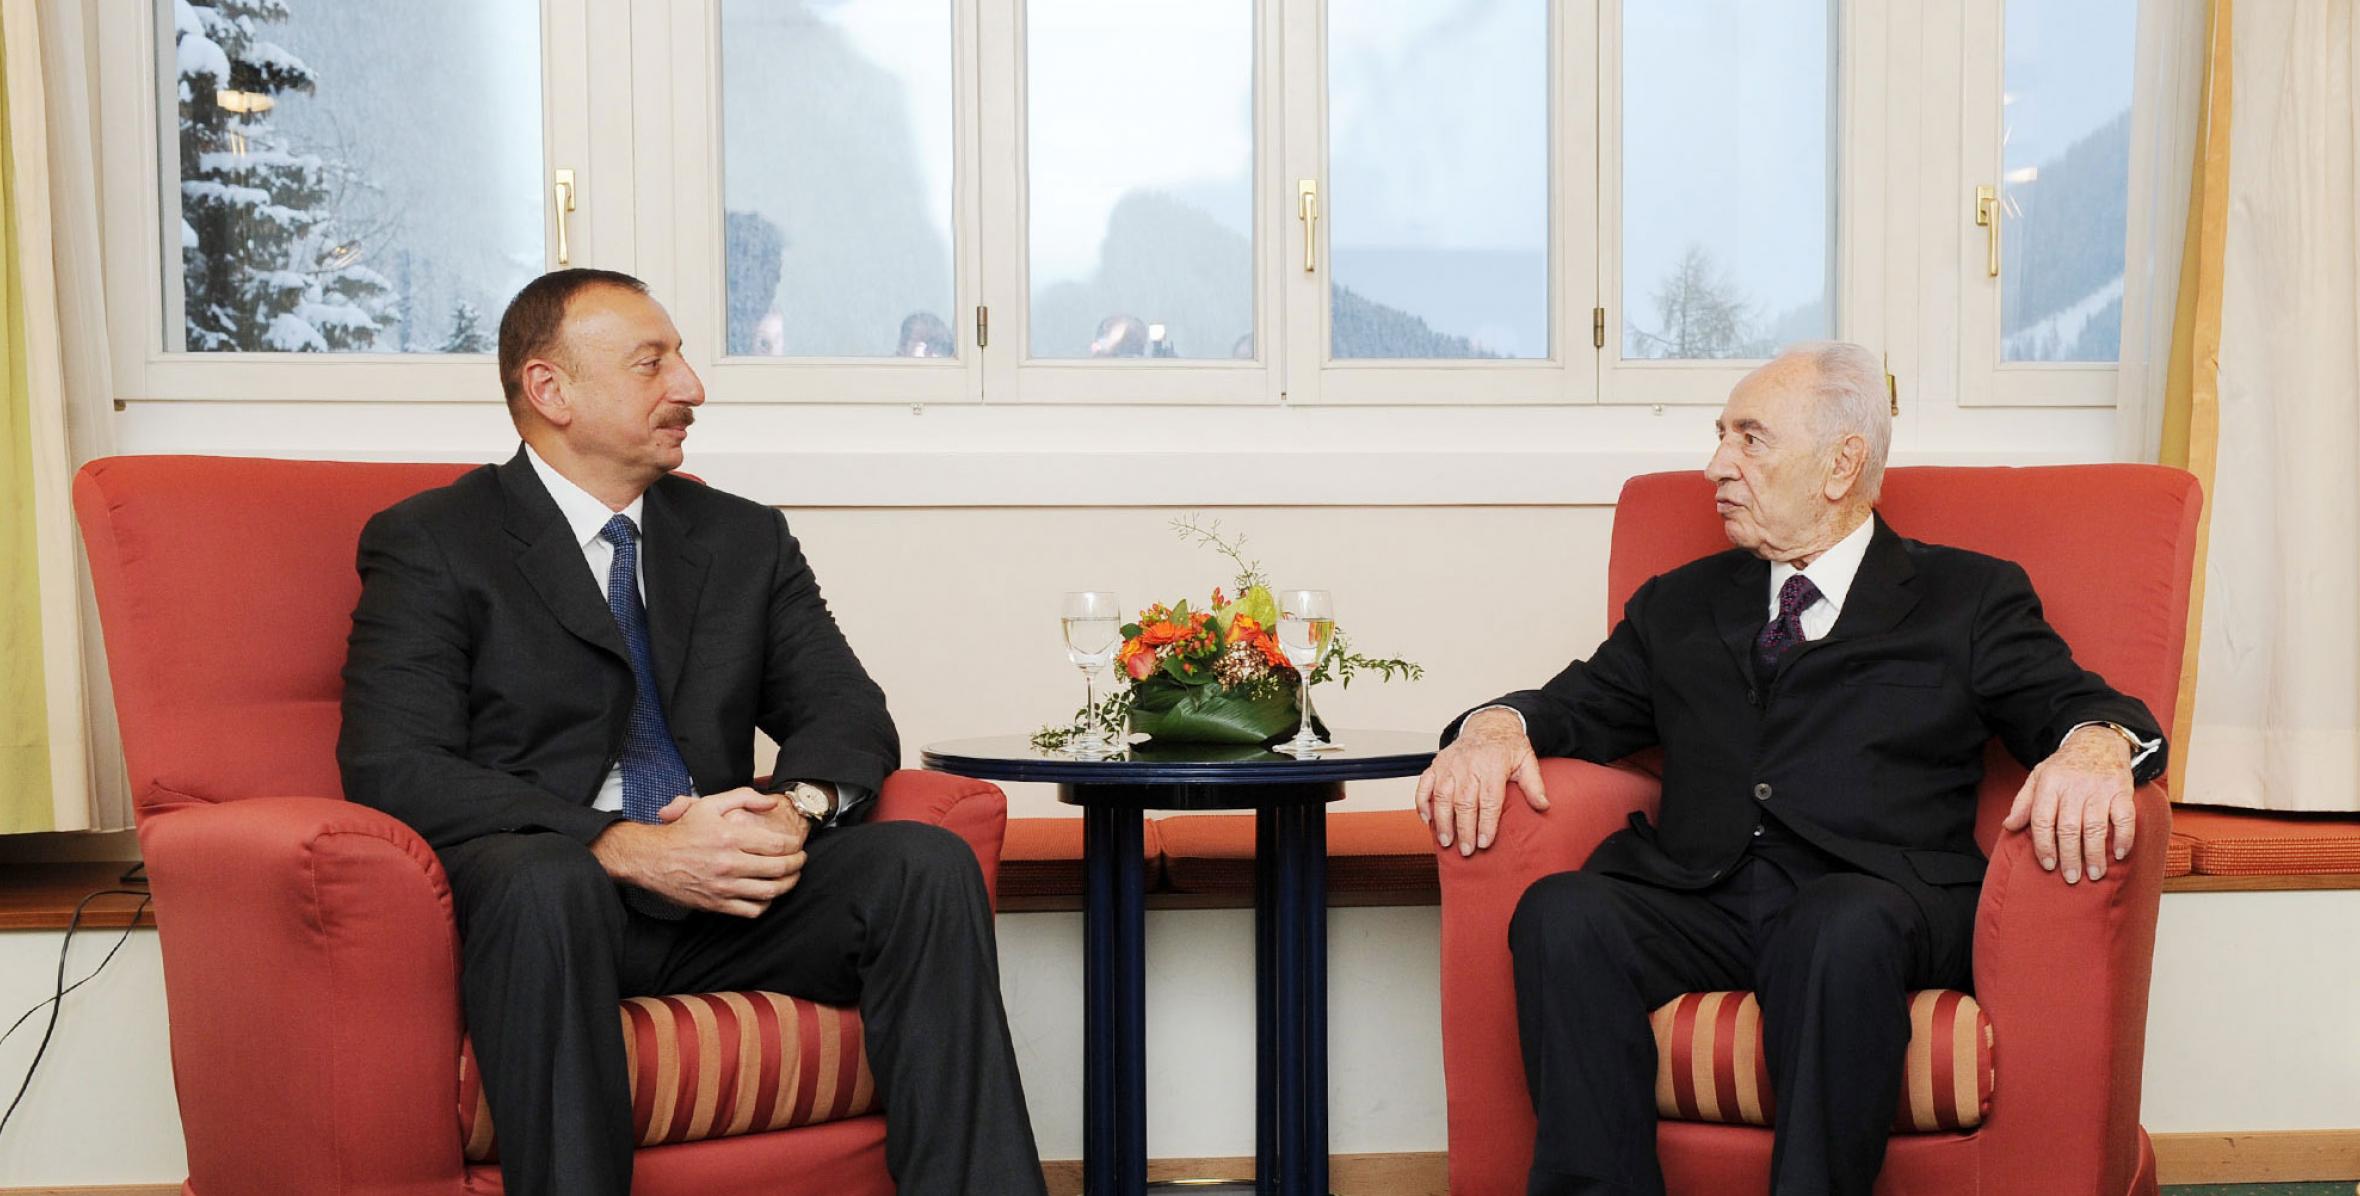 Ilham Aliyev met with Israeli President Shimon Peres